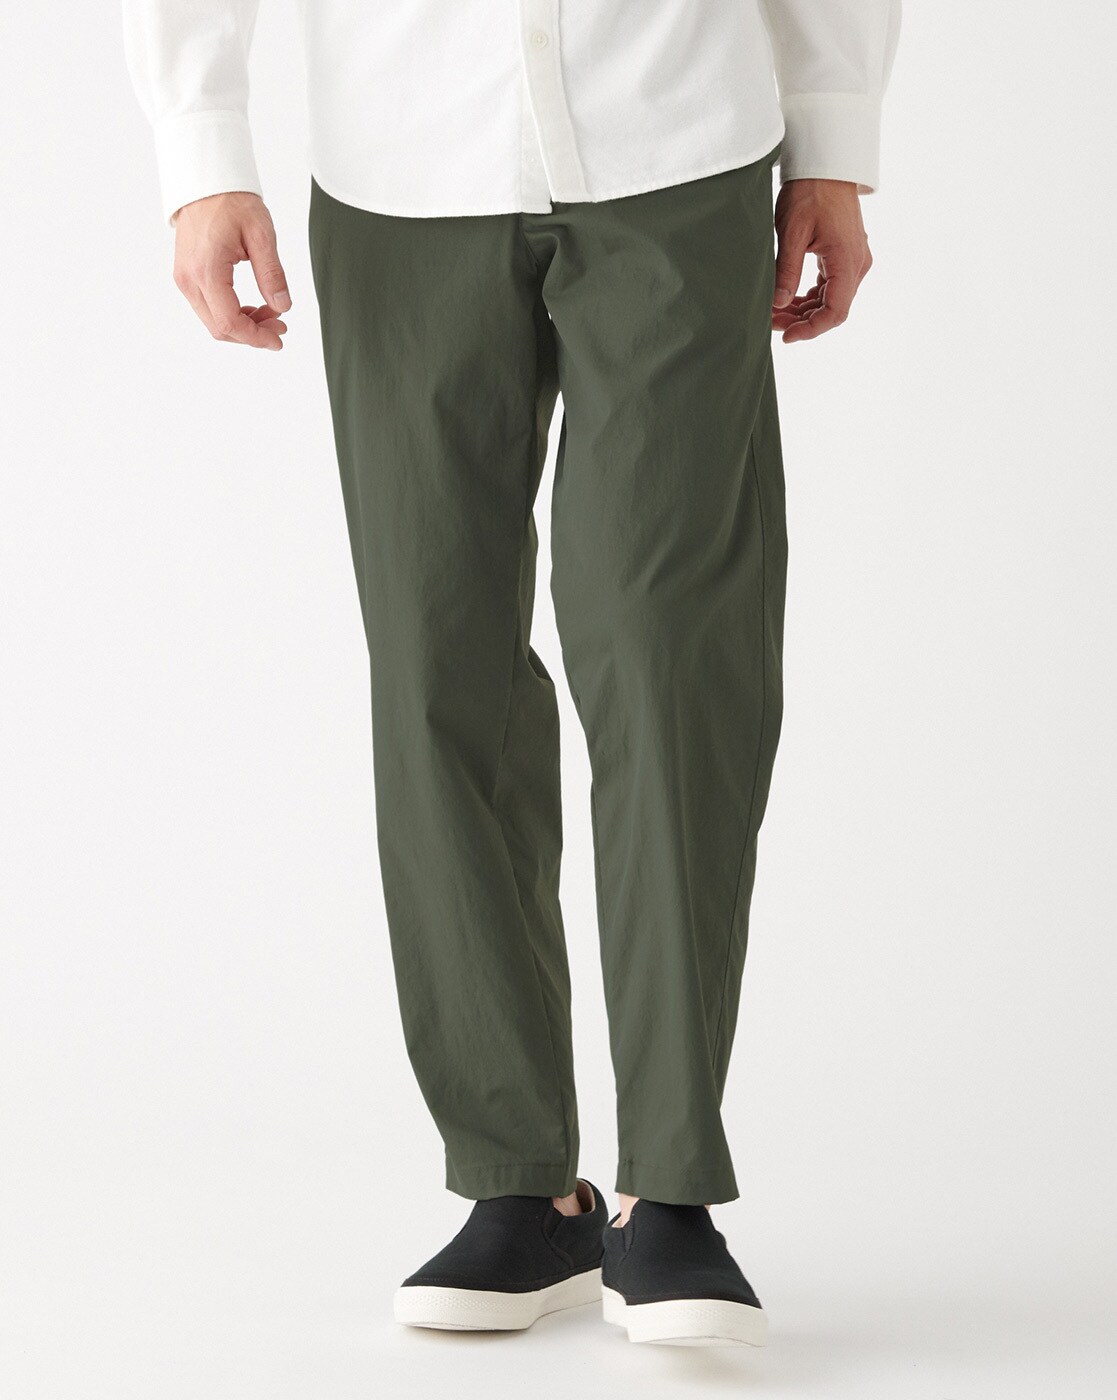 Muji High Waisted Pull On Linen Pants | Linen pants, Pants, Drawstring pants